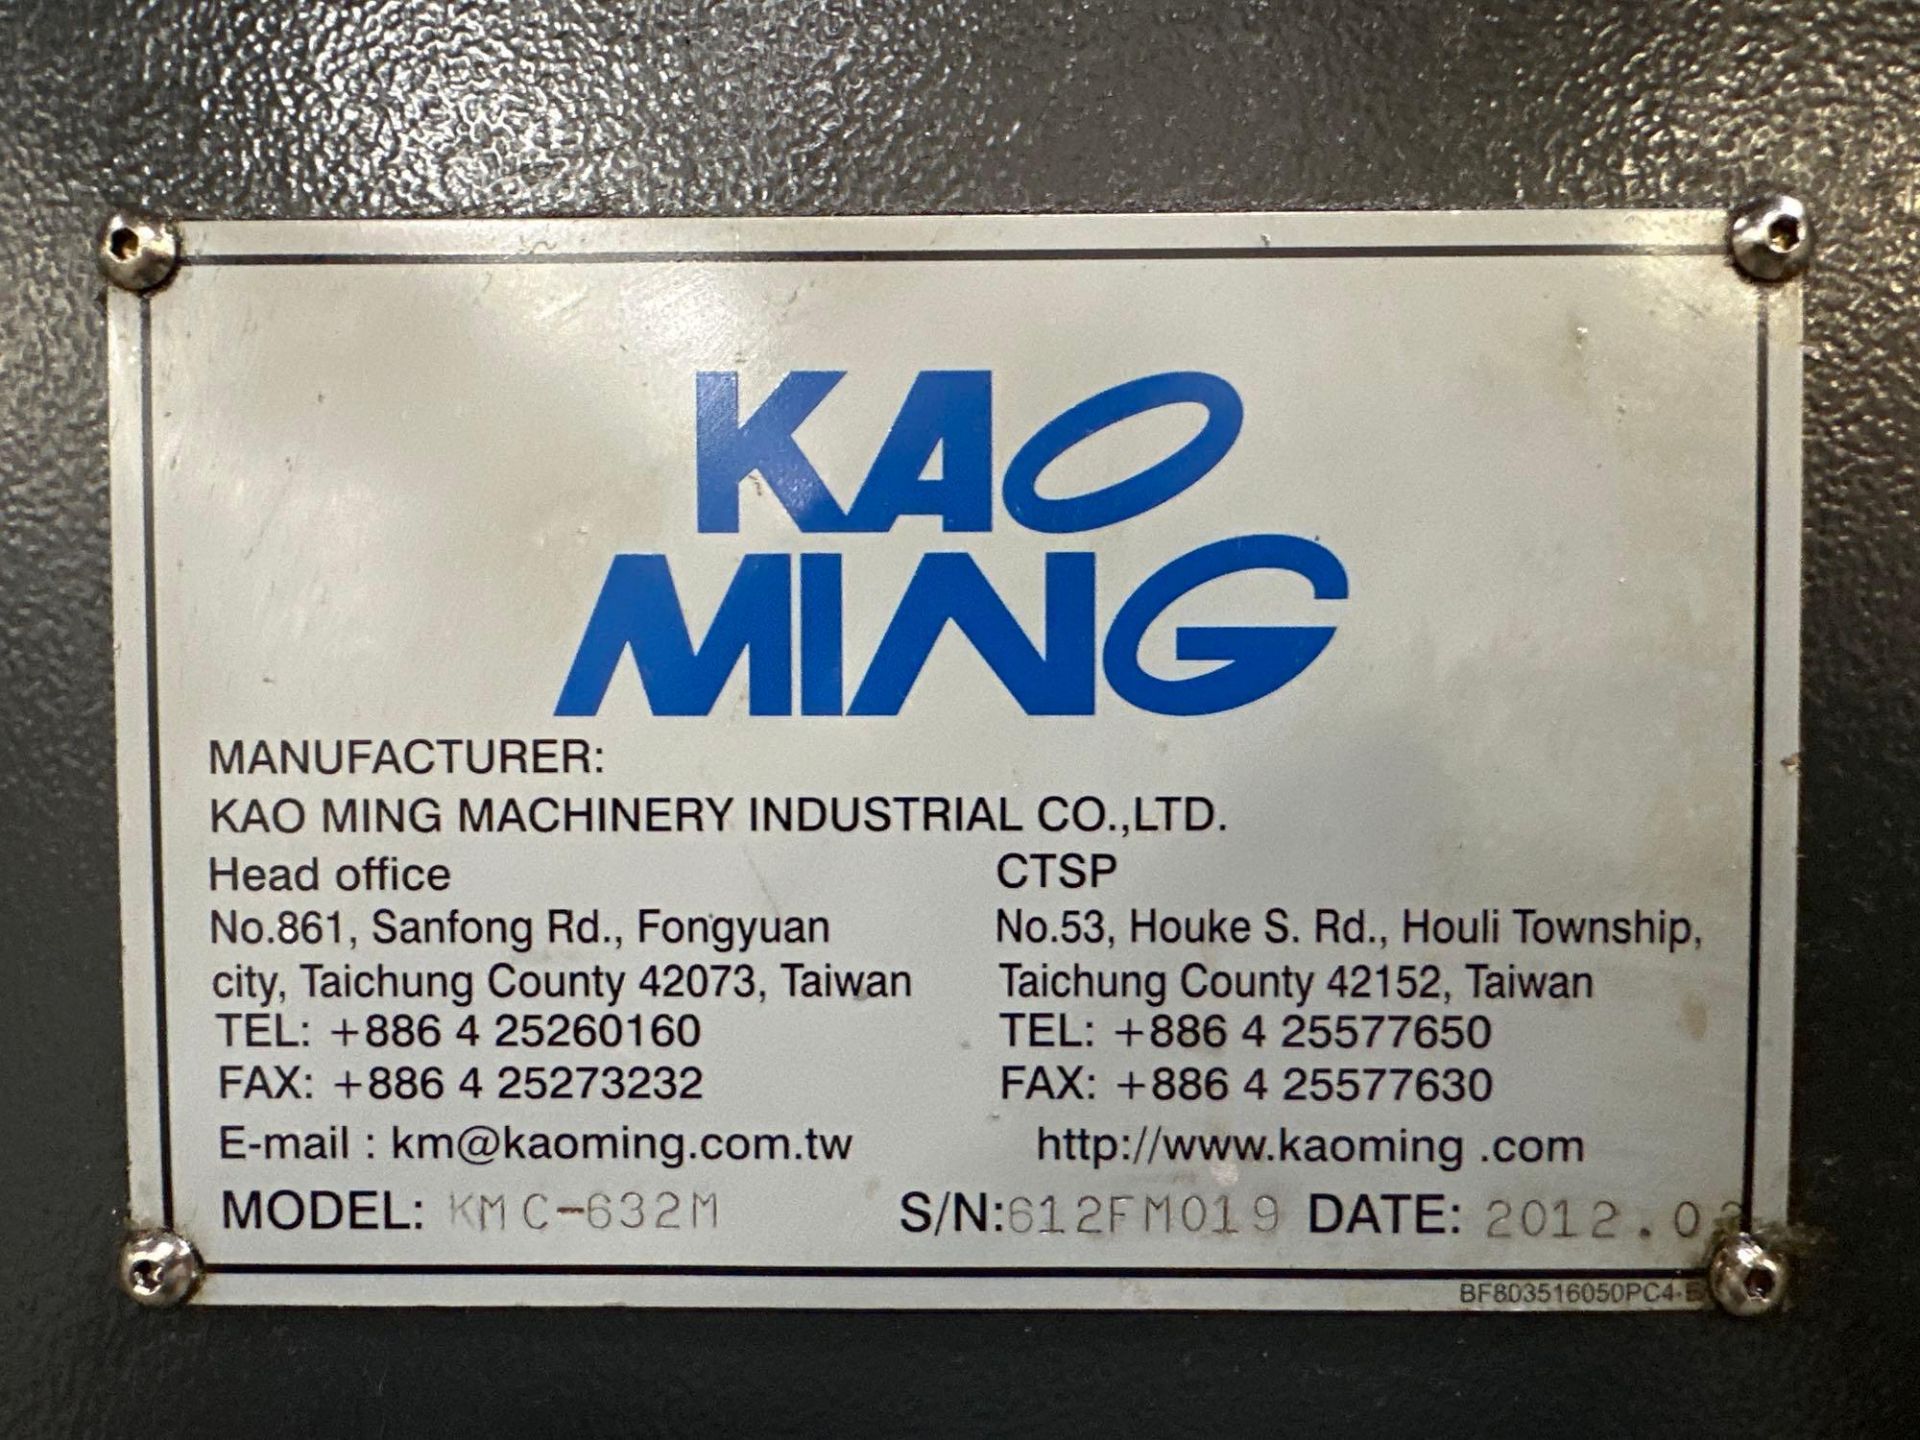 Kao Ming KMC-632M, Fanuc 18iMB, 236" x 126" x 43" travels, 106” x 128” Table, 4000 RPM, CT50, 30 ATC - Image 13 of 14